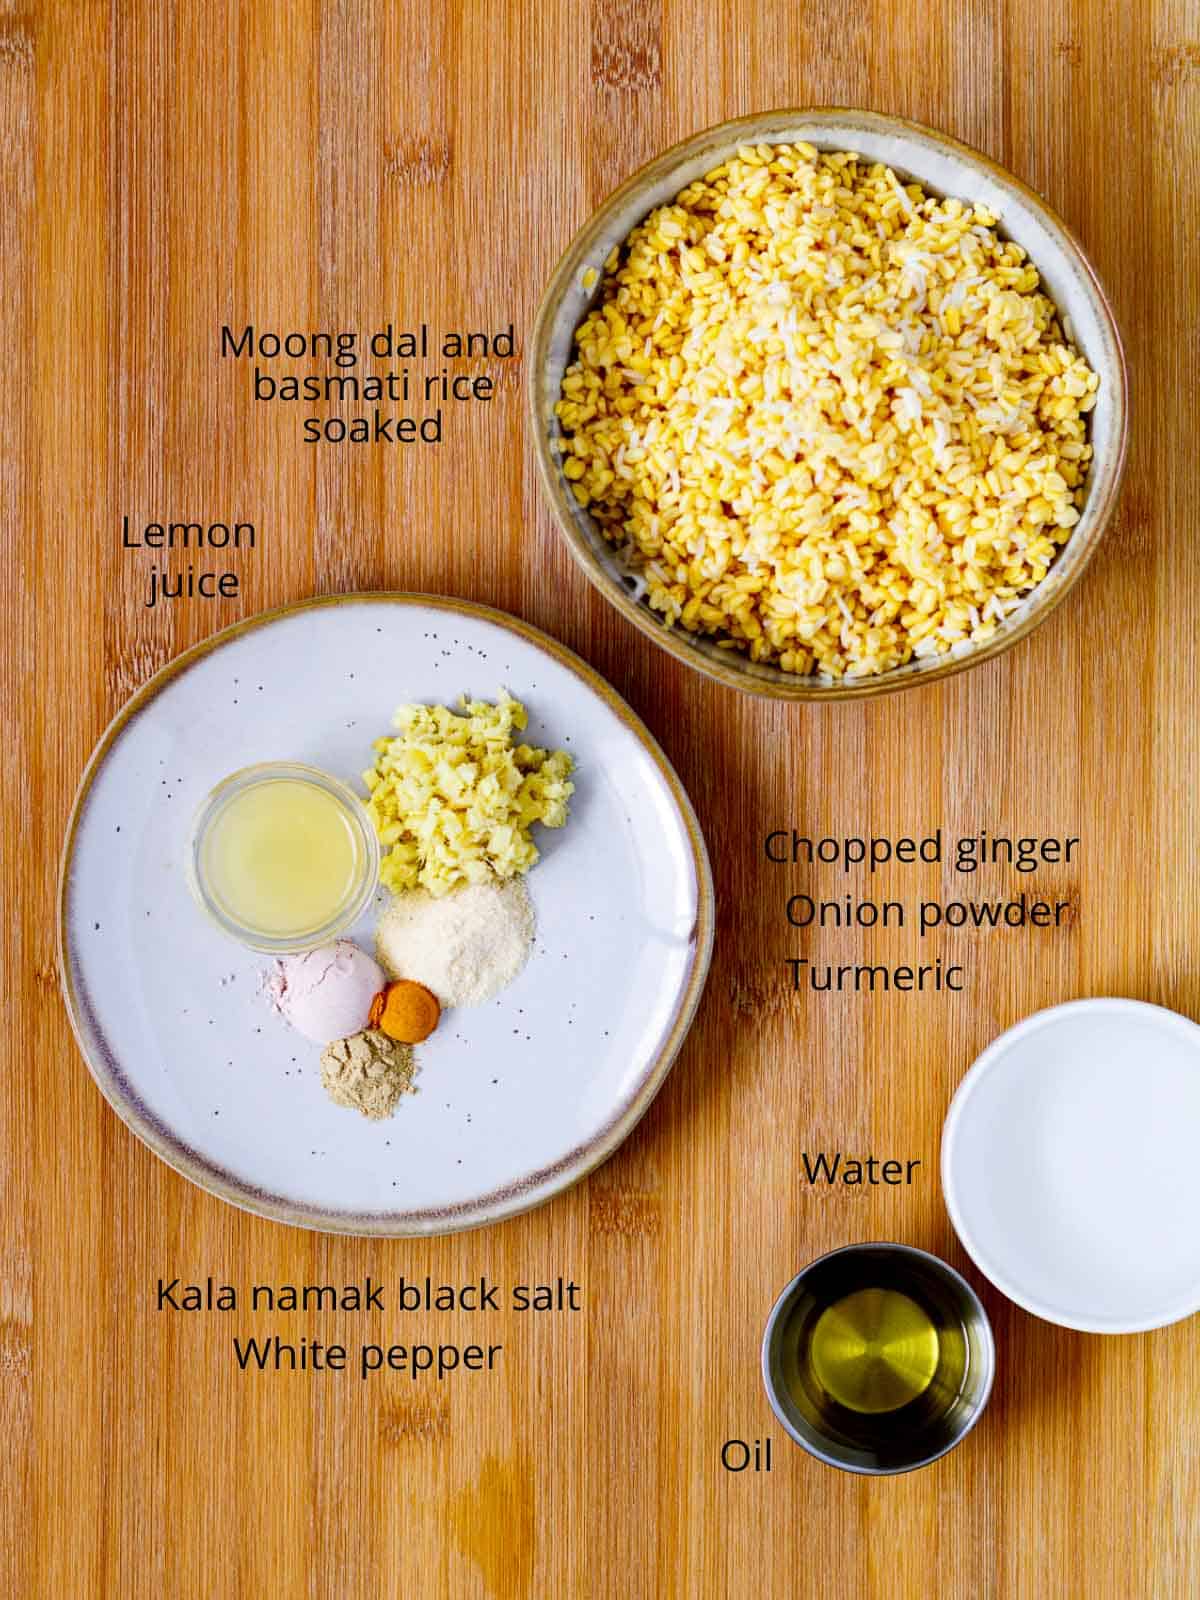 Soaked moong da, basmati rice, and eggy flavor seasonings.